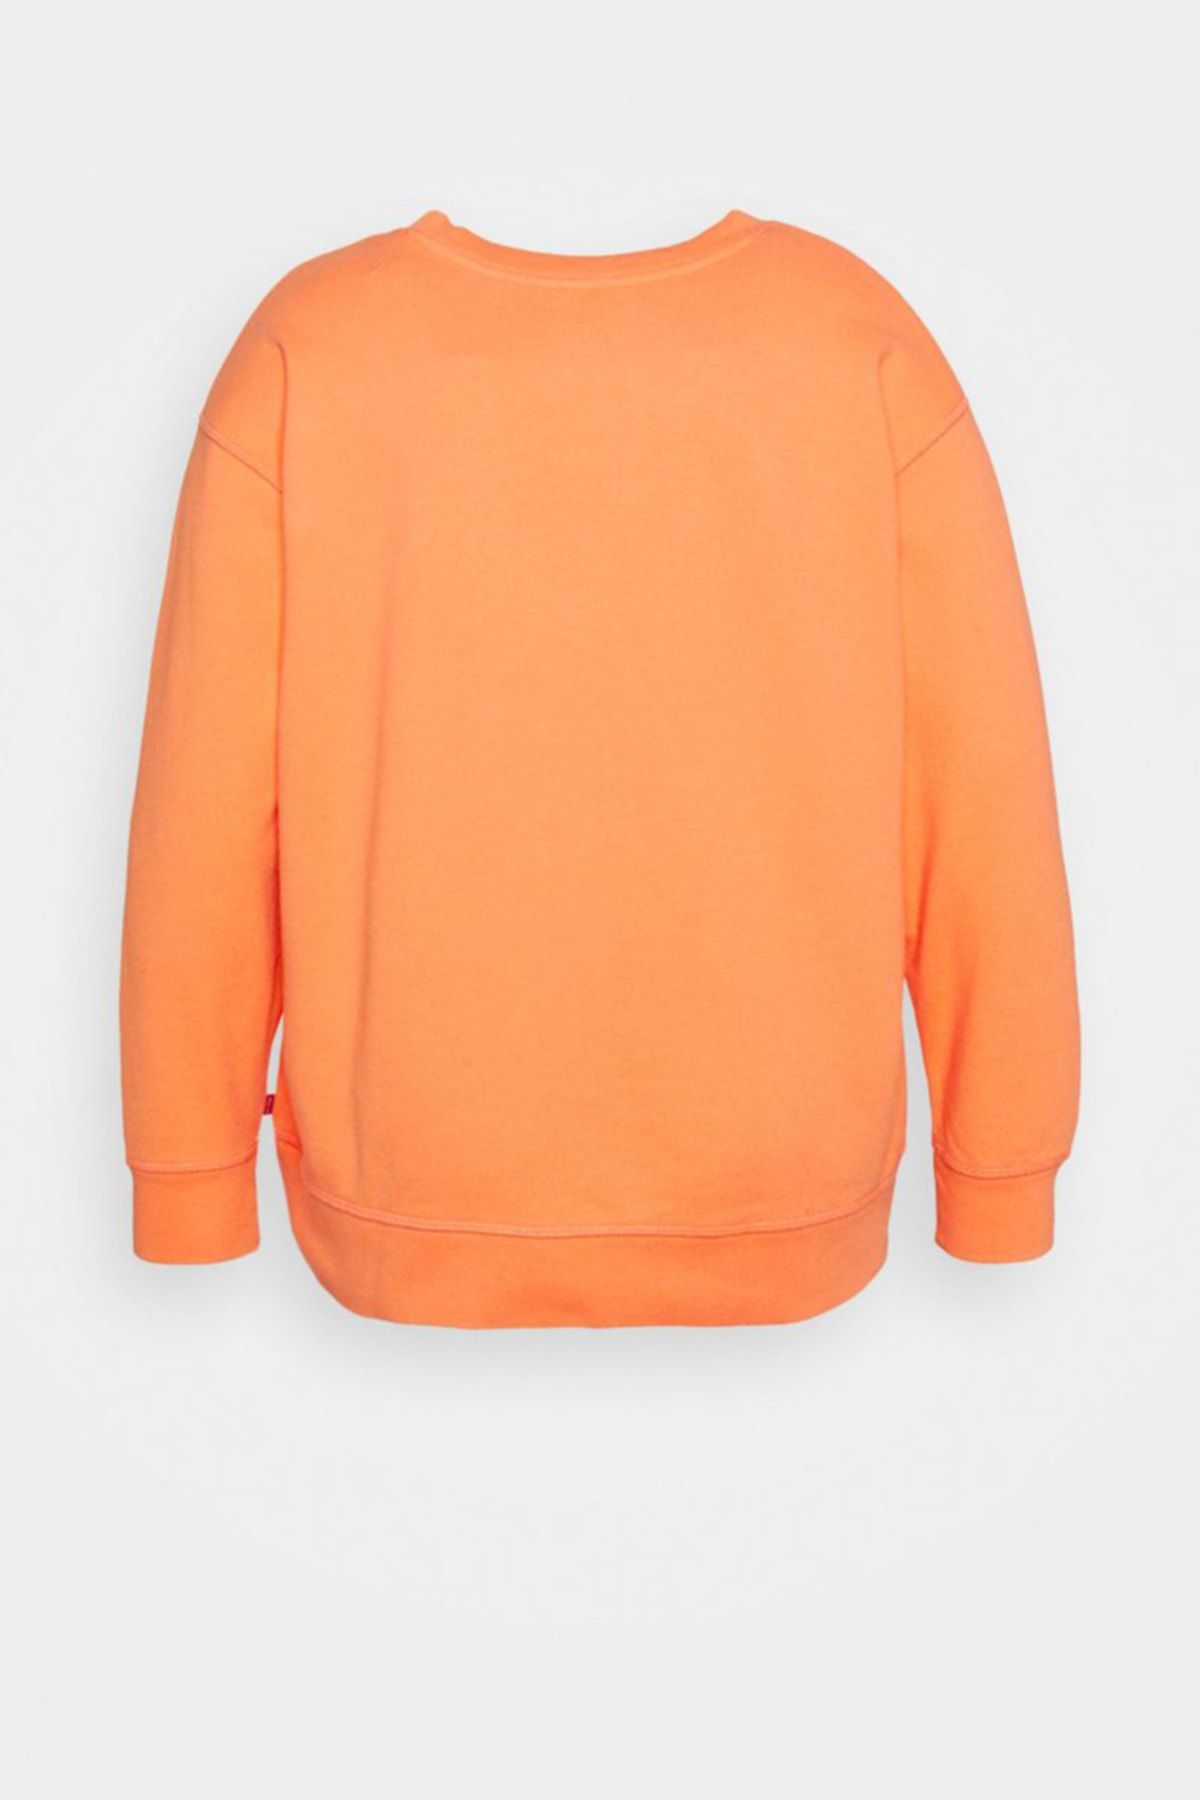 Levi's Sweatshirt - Orange - Regular fit - Trendyol